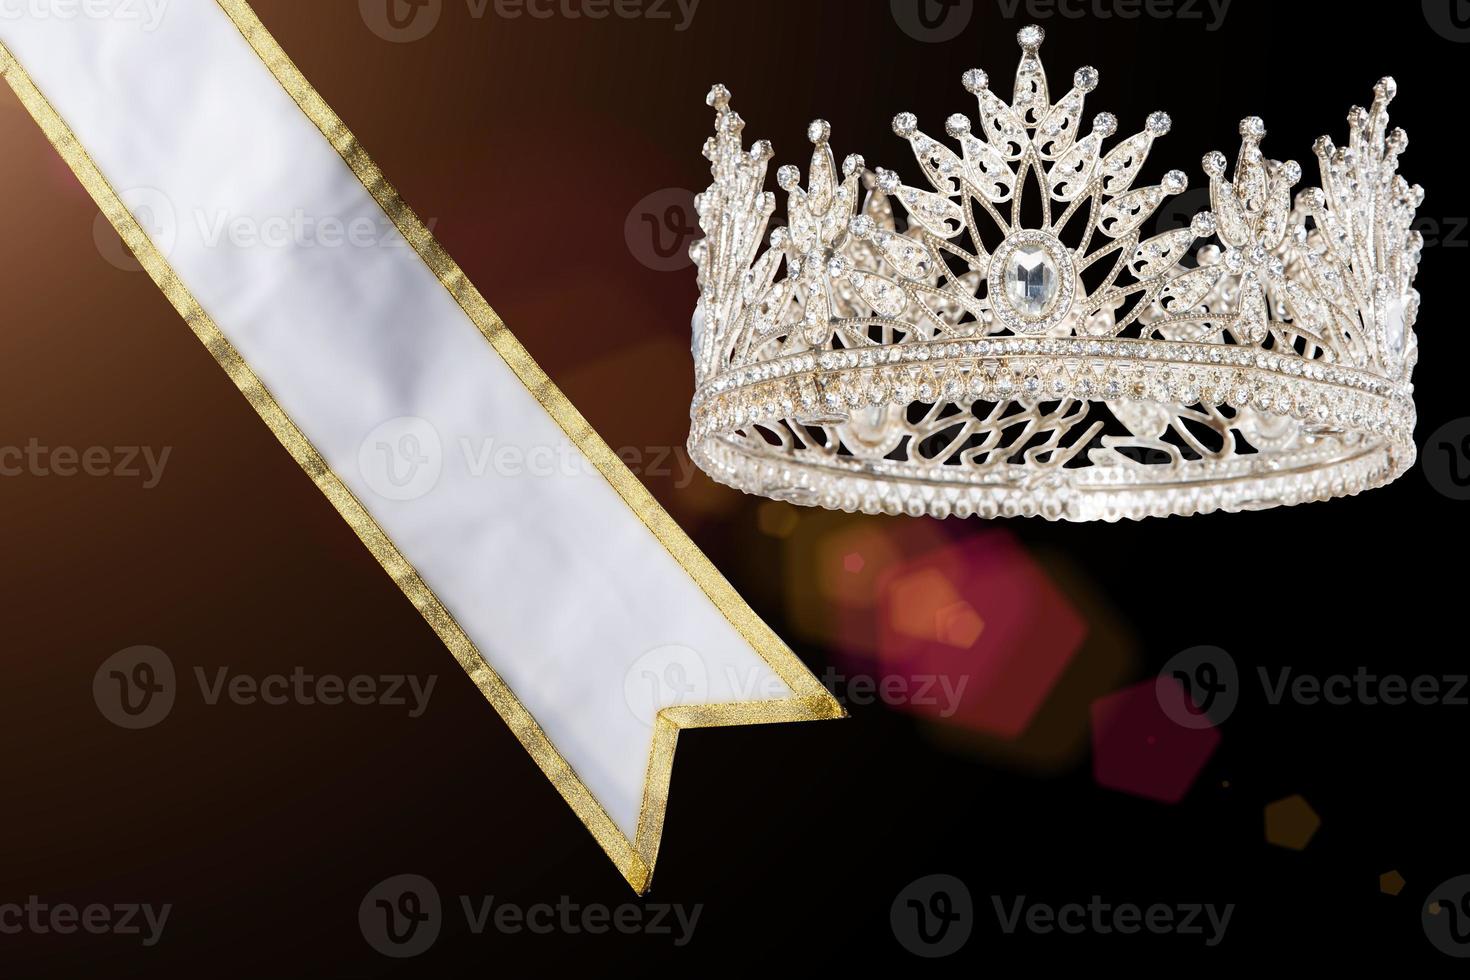 prêmio premiado para o vencedor do concurso de concurso Miss Beauty Queen é faixa, coroa de diamante, iluminação de estúdio abstrato drapeado escuro fundo têxtil foto